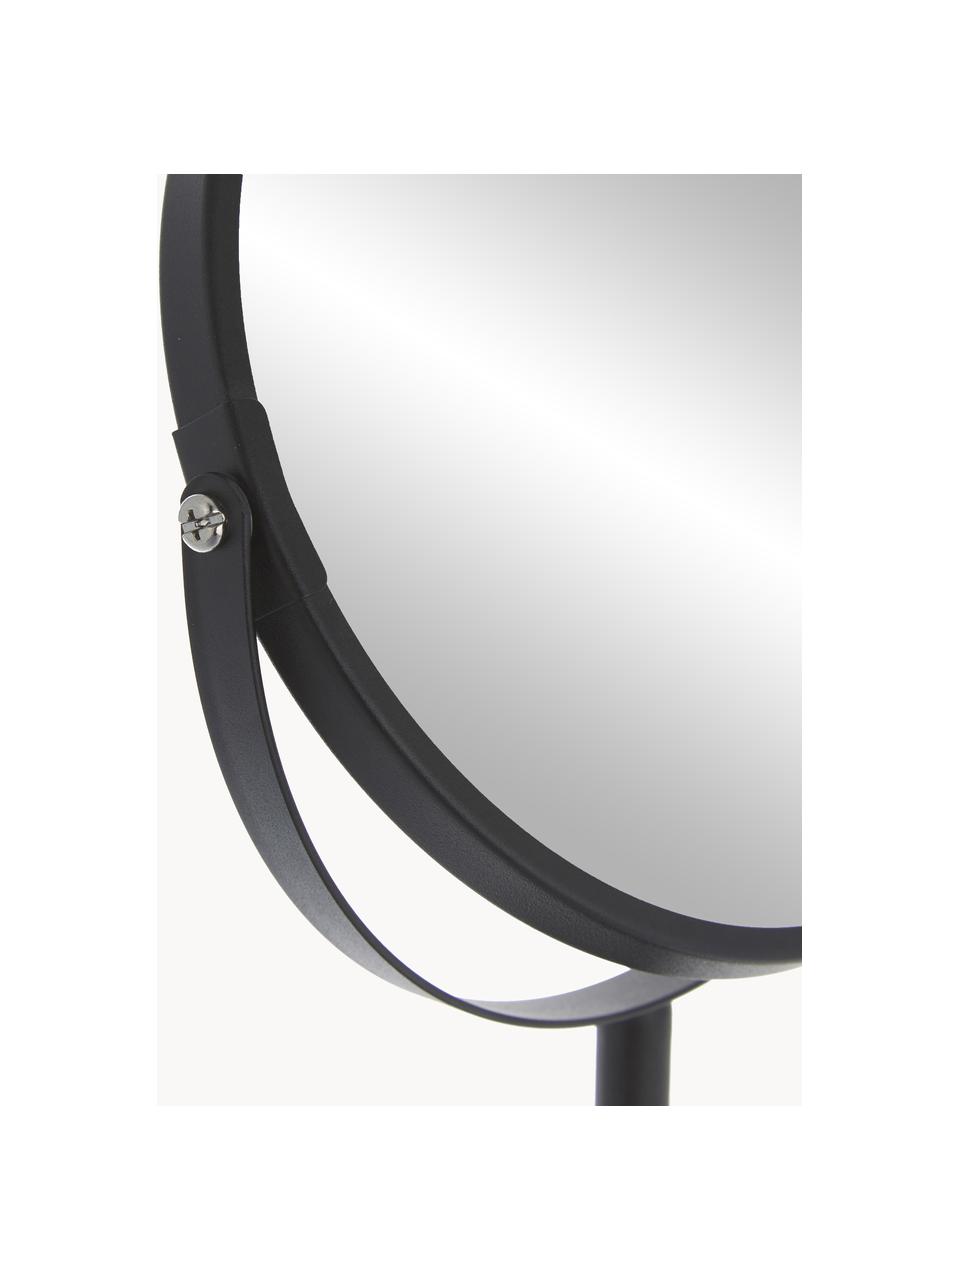 Espejo tocador redondo de metal Classic, con aumento, Espejo: cristal, Negro, Ø 20 x Al 35 cm